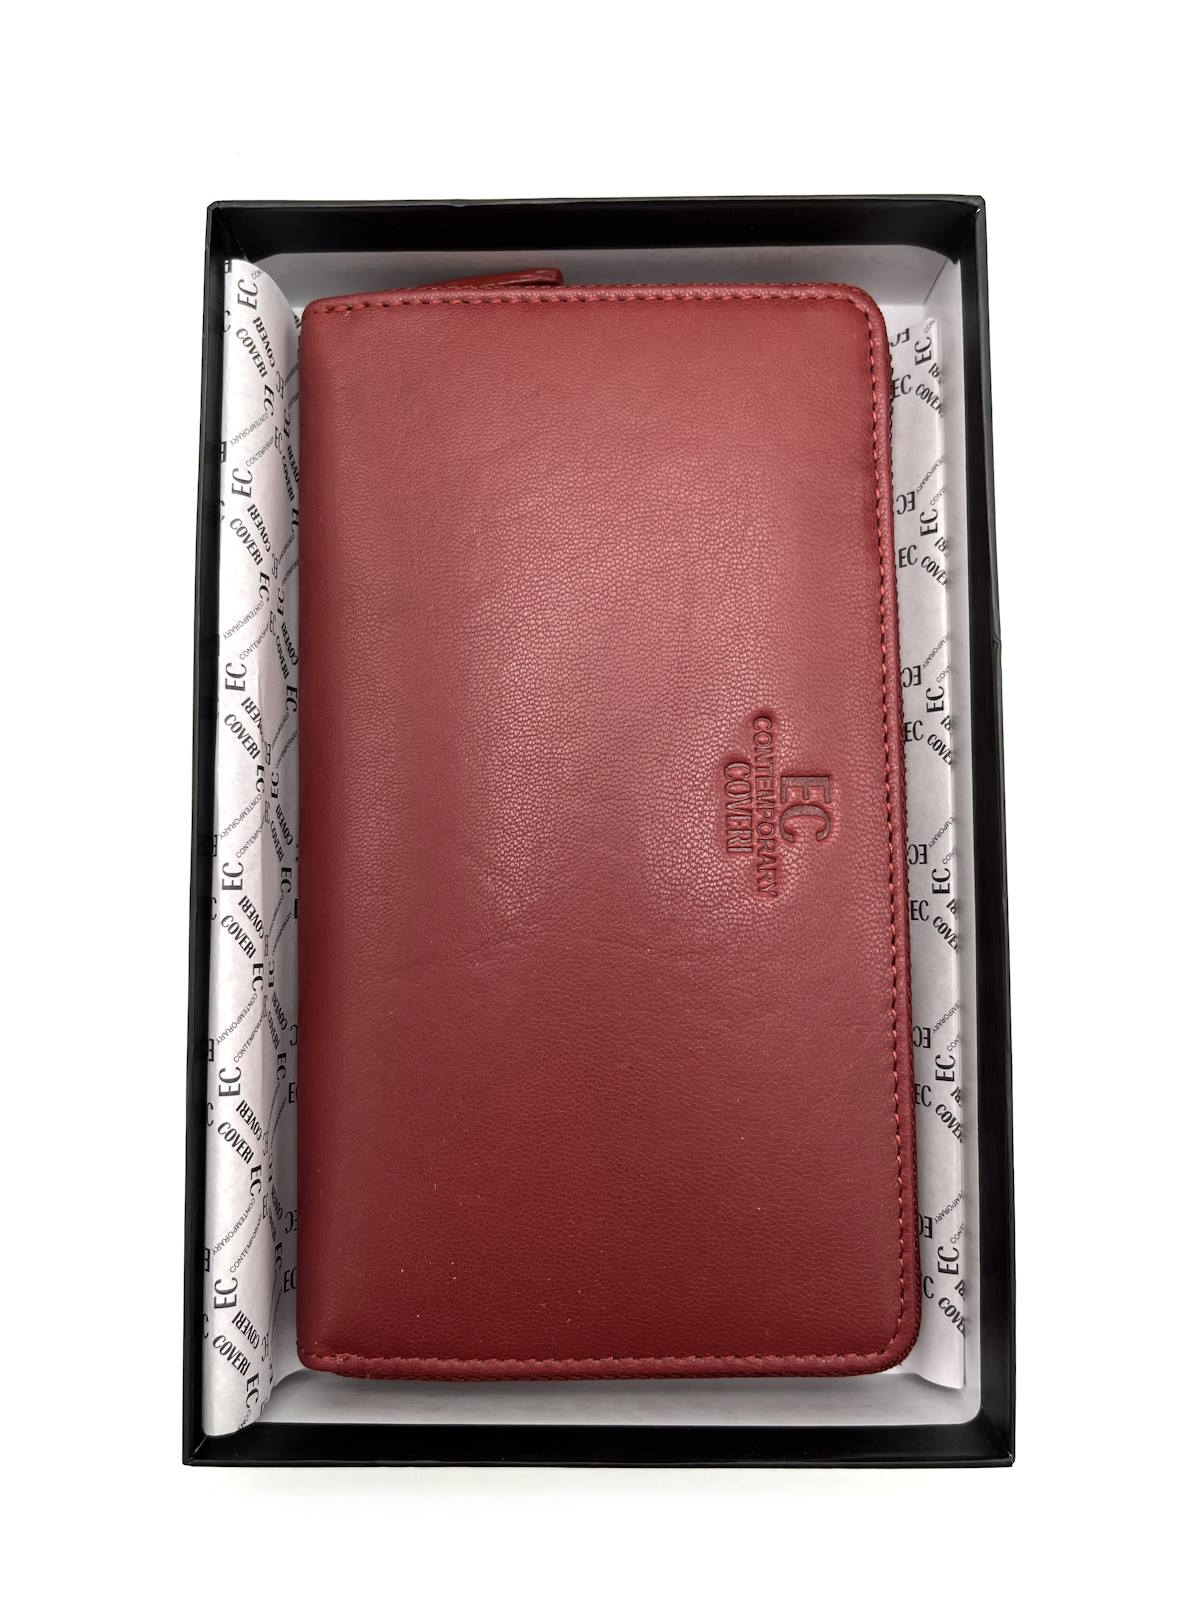 Genuine leather wallet, Brand EC COVERI, art. EC23760-38